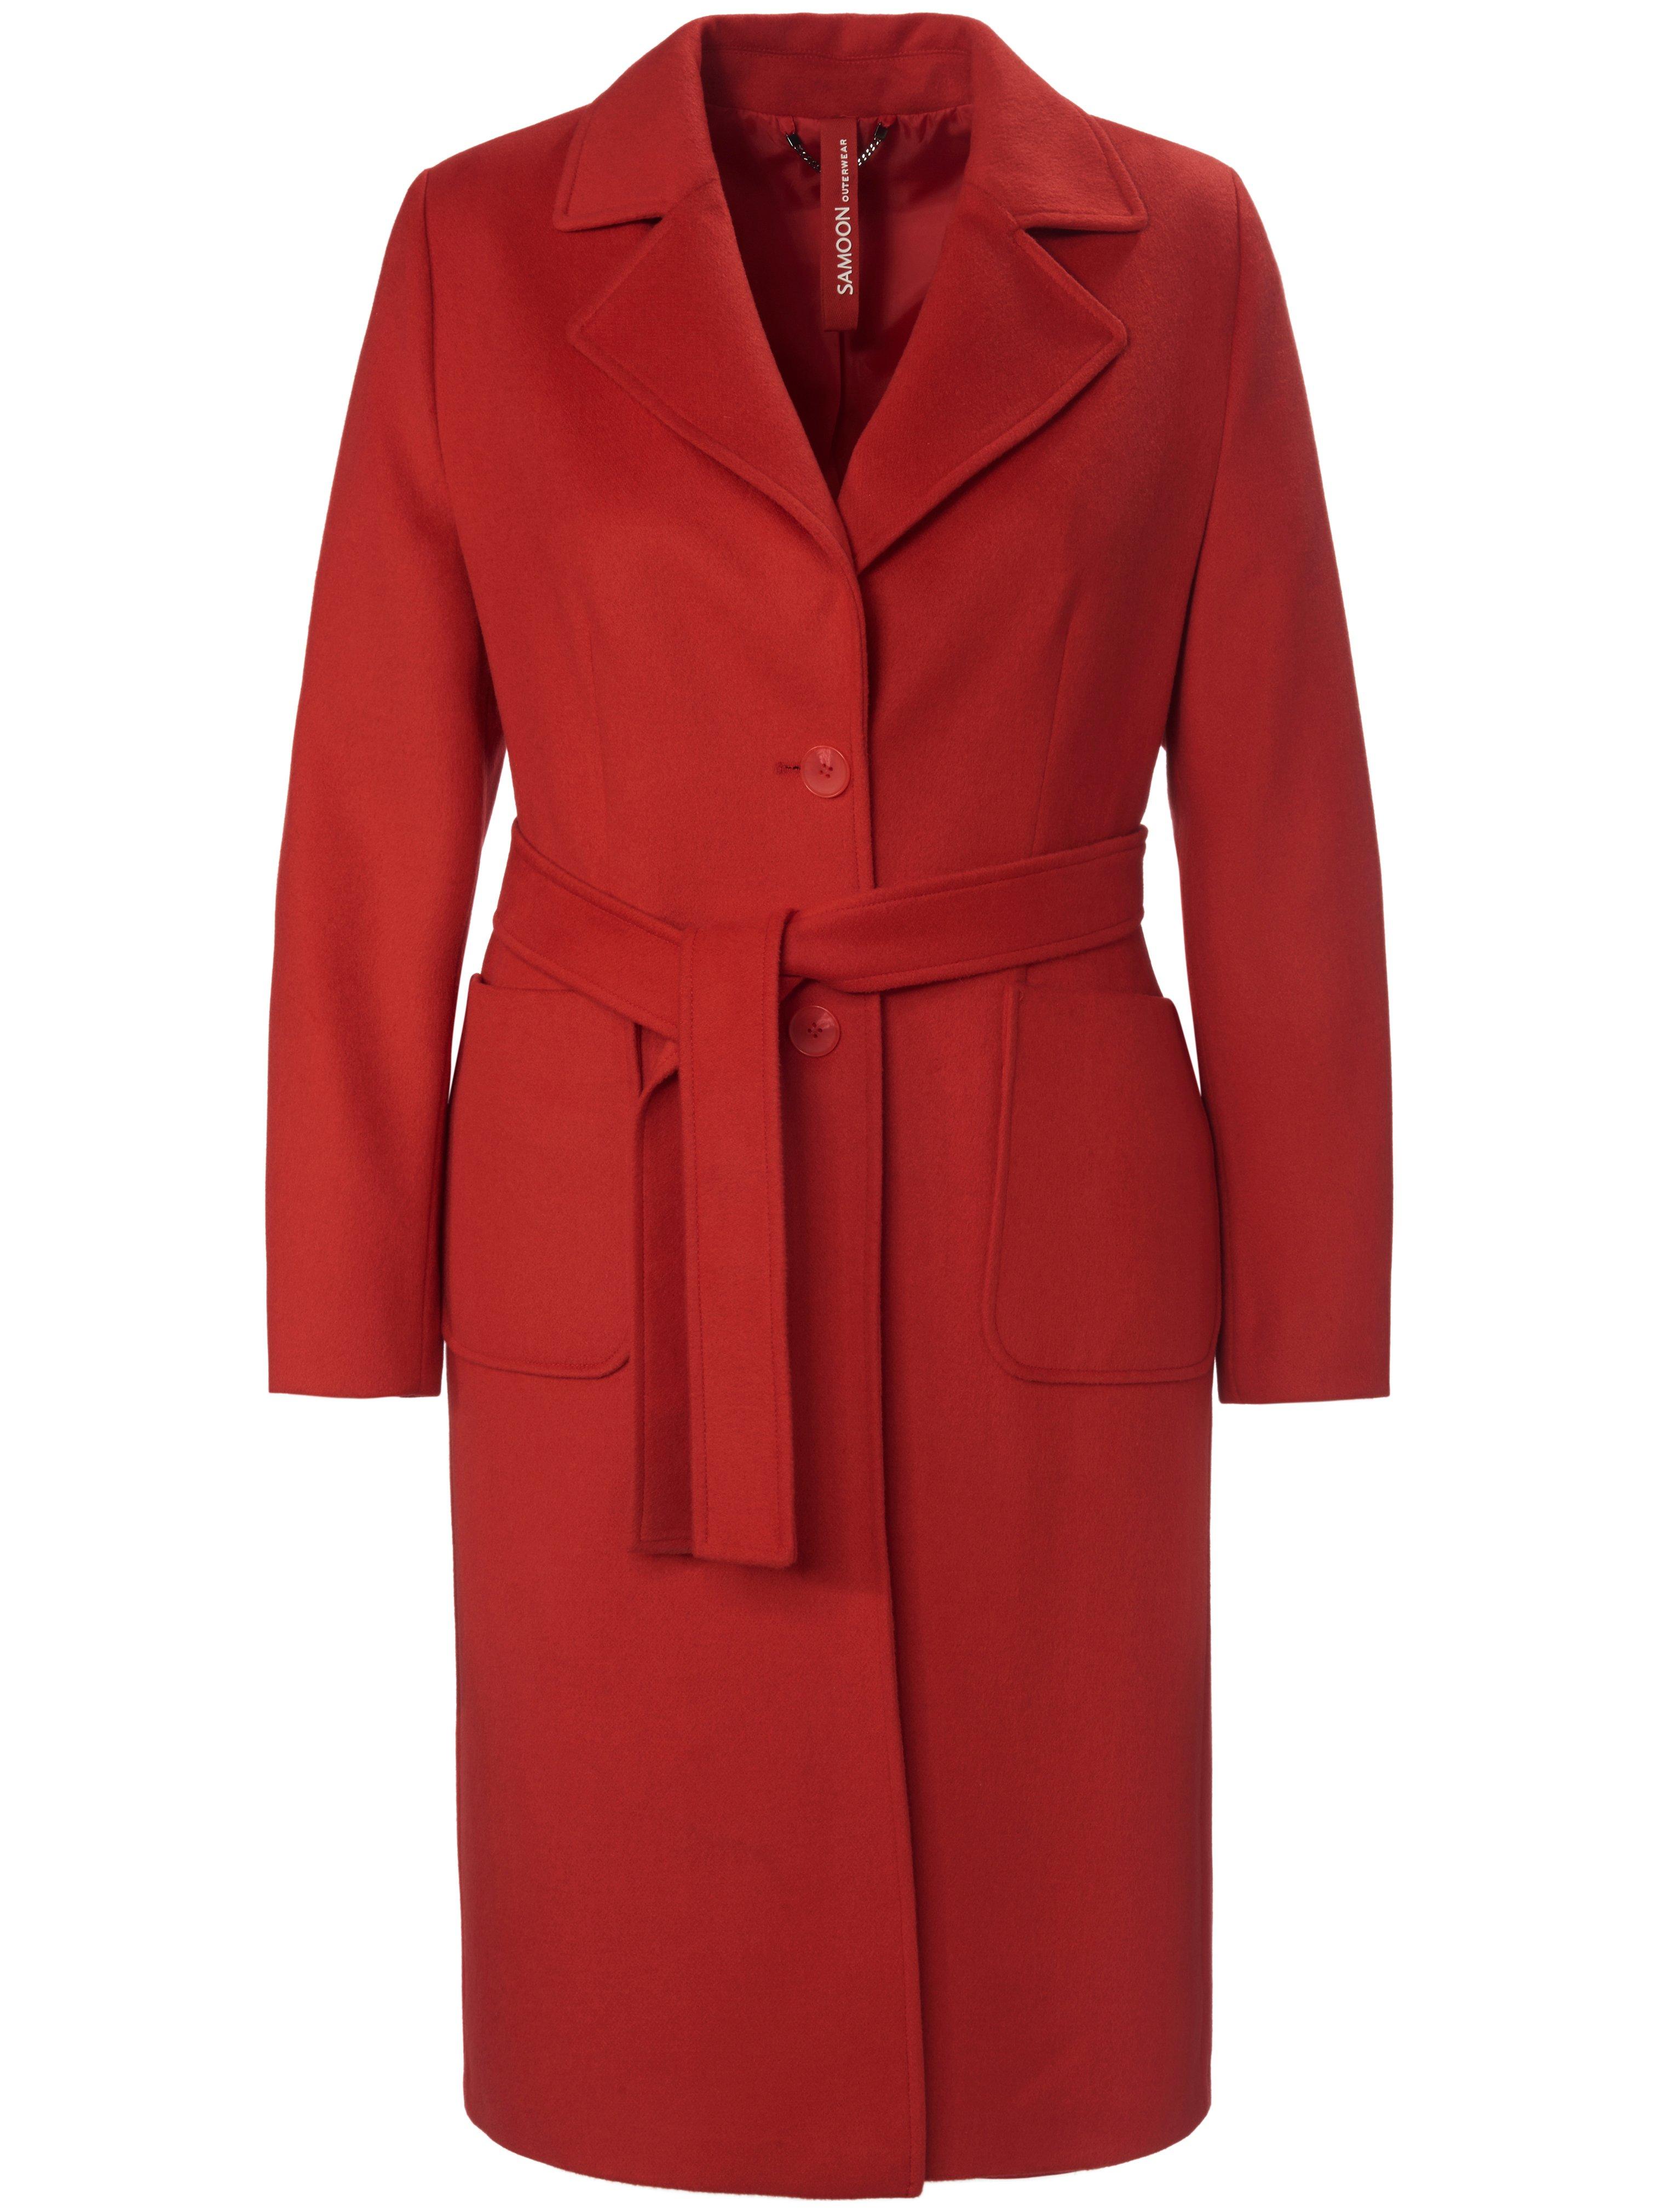 Le manteau peu froissable avec ceinture amovible  Samoon rouge